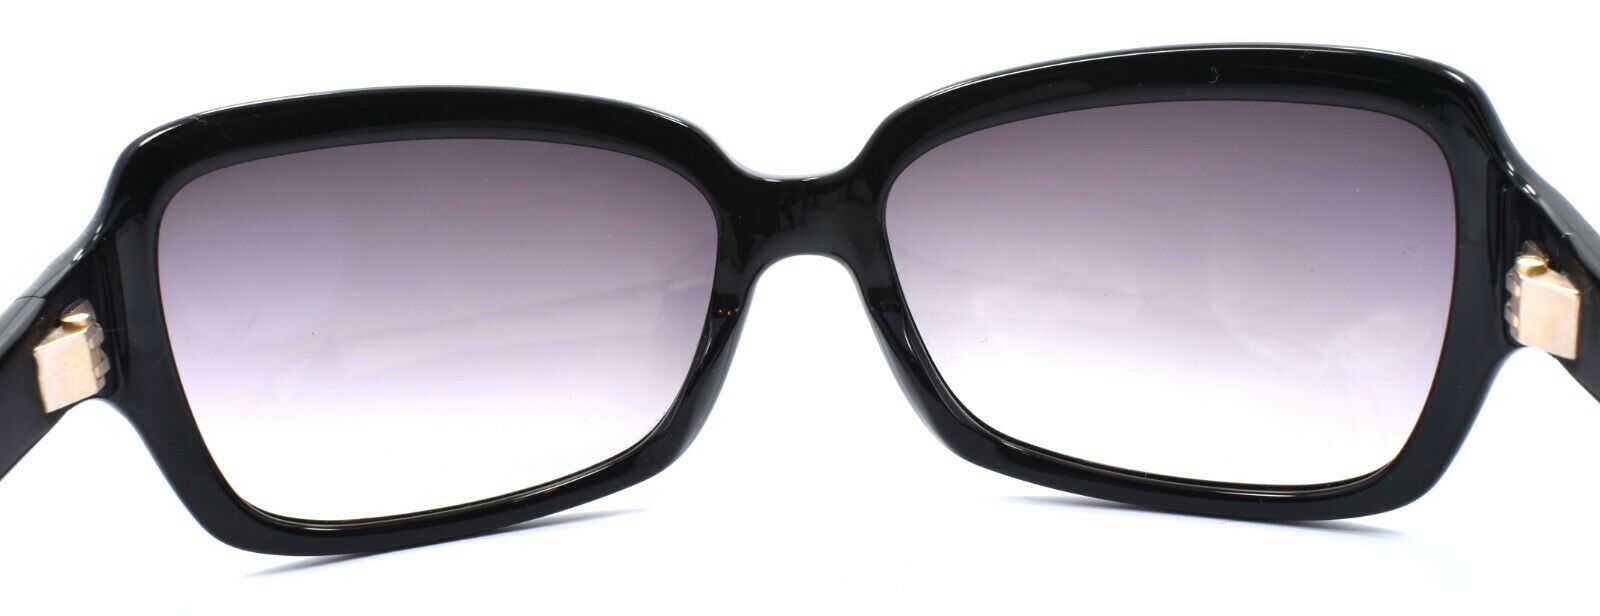 4-Oliver Peoples Dunaway BK Women's Sunglasses Black / Smoke Gradient JAPAN-Does not apply-IKSpecs